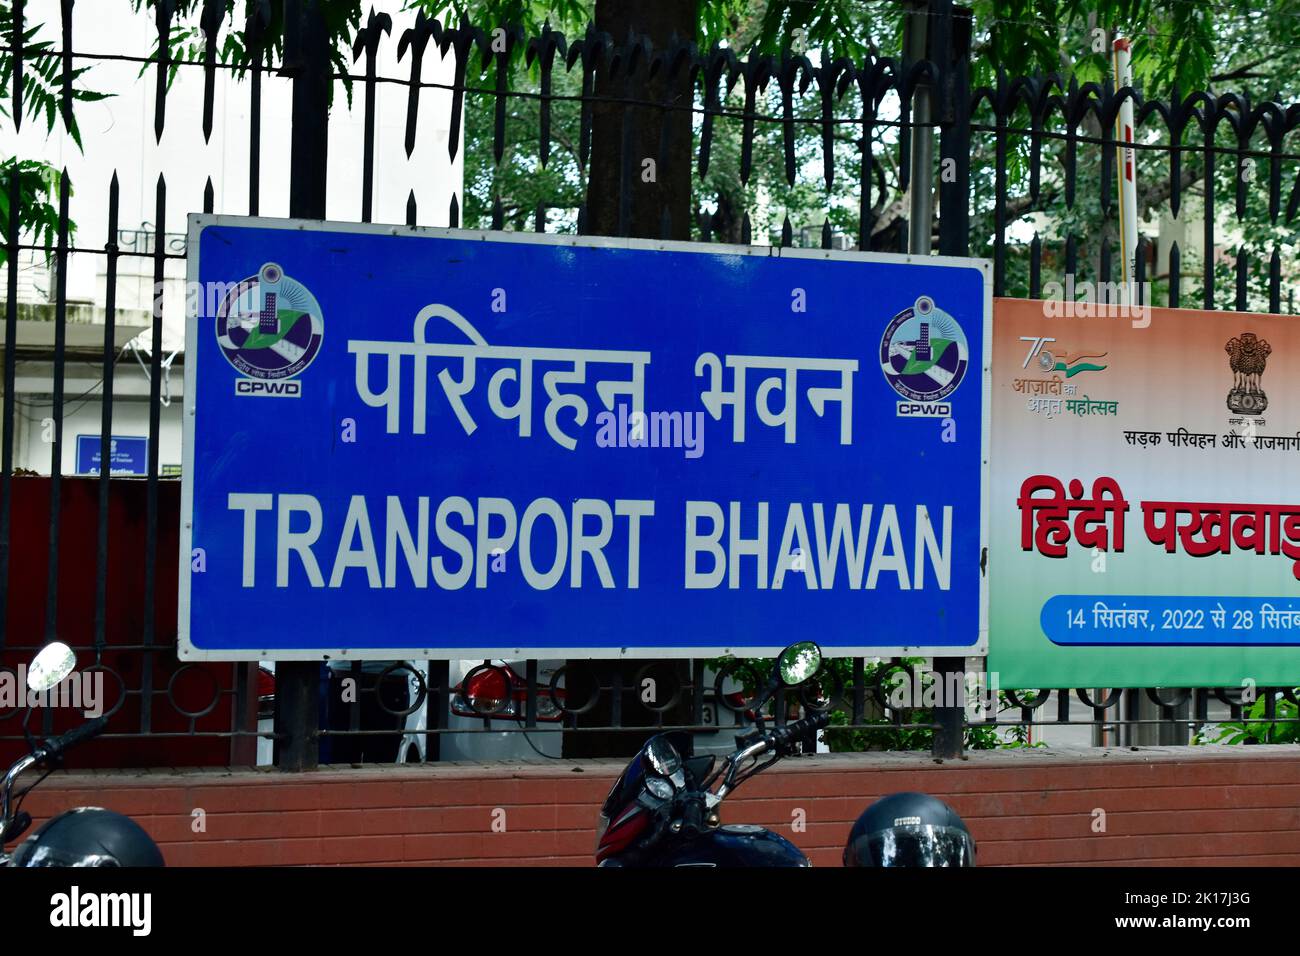 New Delhi, India - 14 September 2022 : Transport bhawan sing board on gate Stock Photo